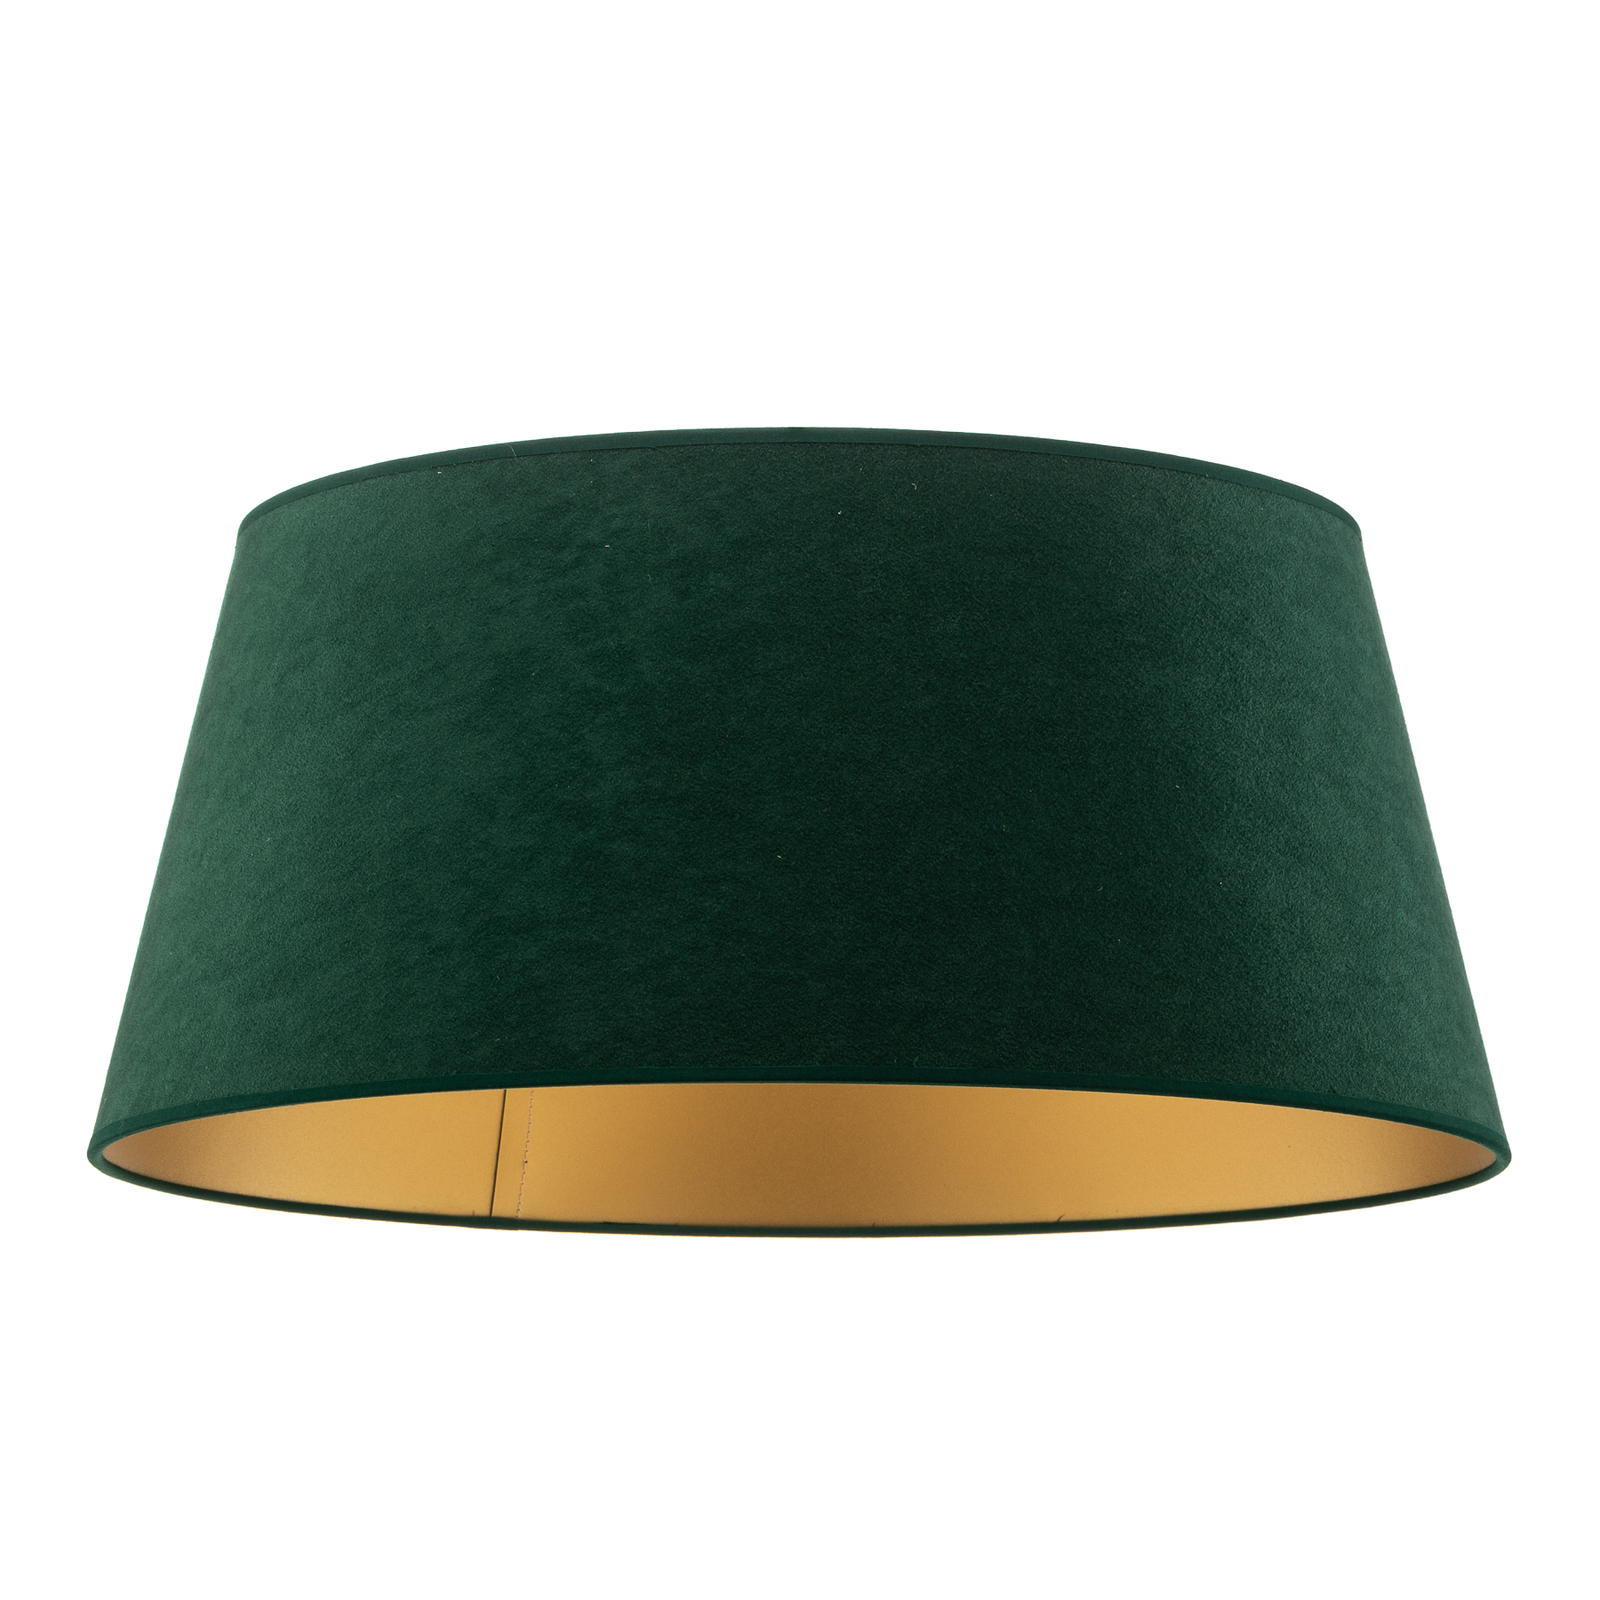 Cone lampshade height 22.5 cm, dark green/gold